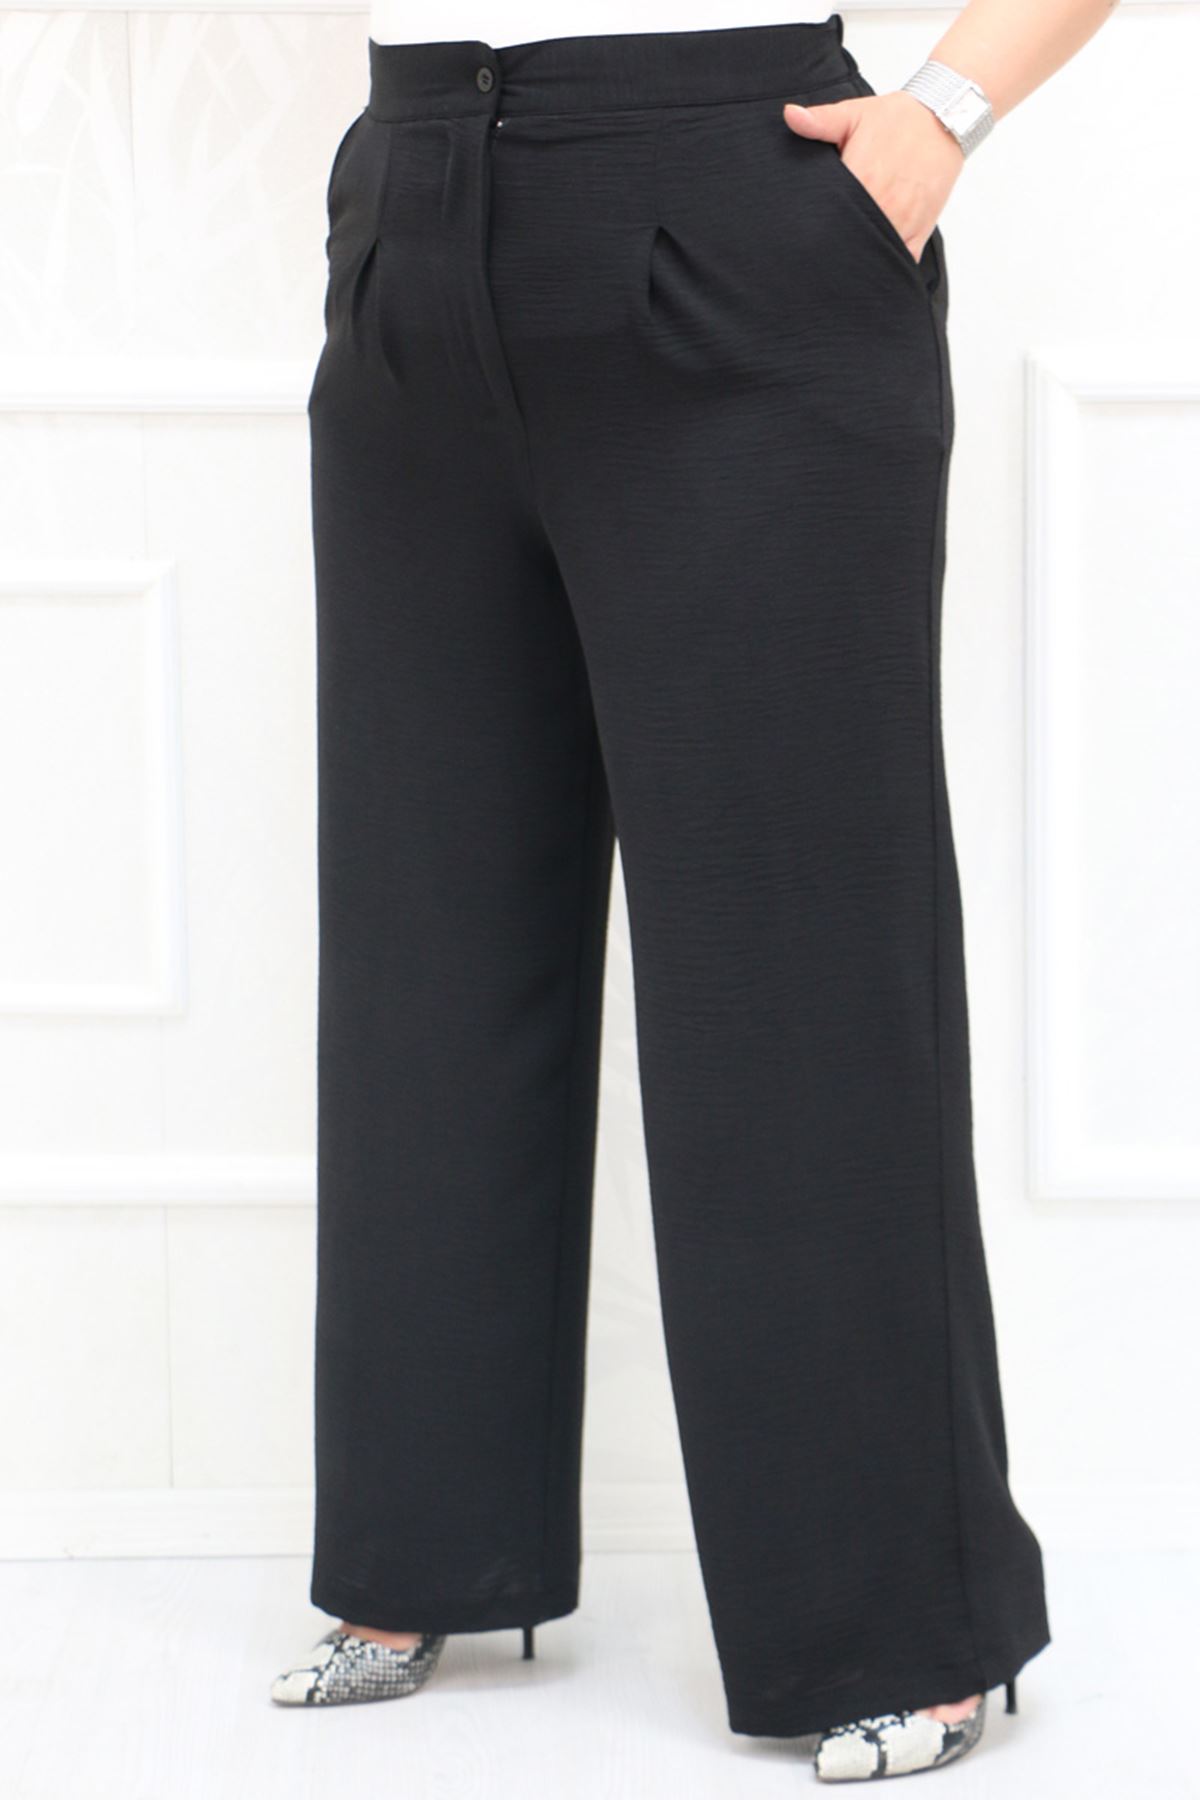 39020 Large Size Airobin Elastic Waist Trousers - Black